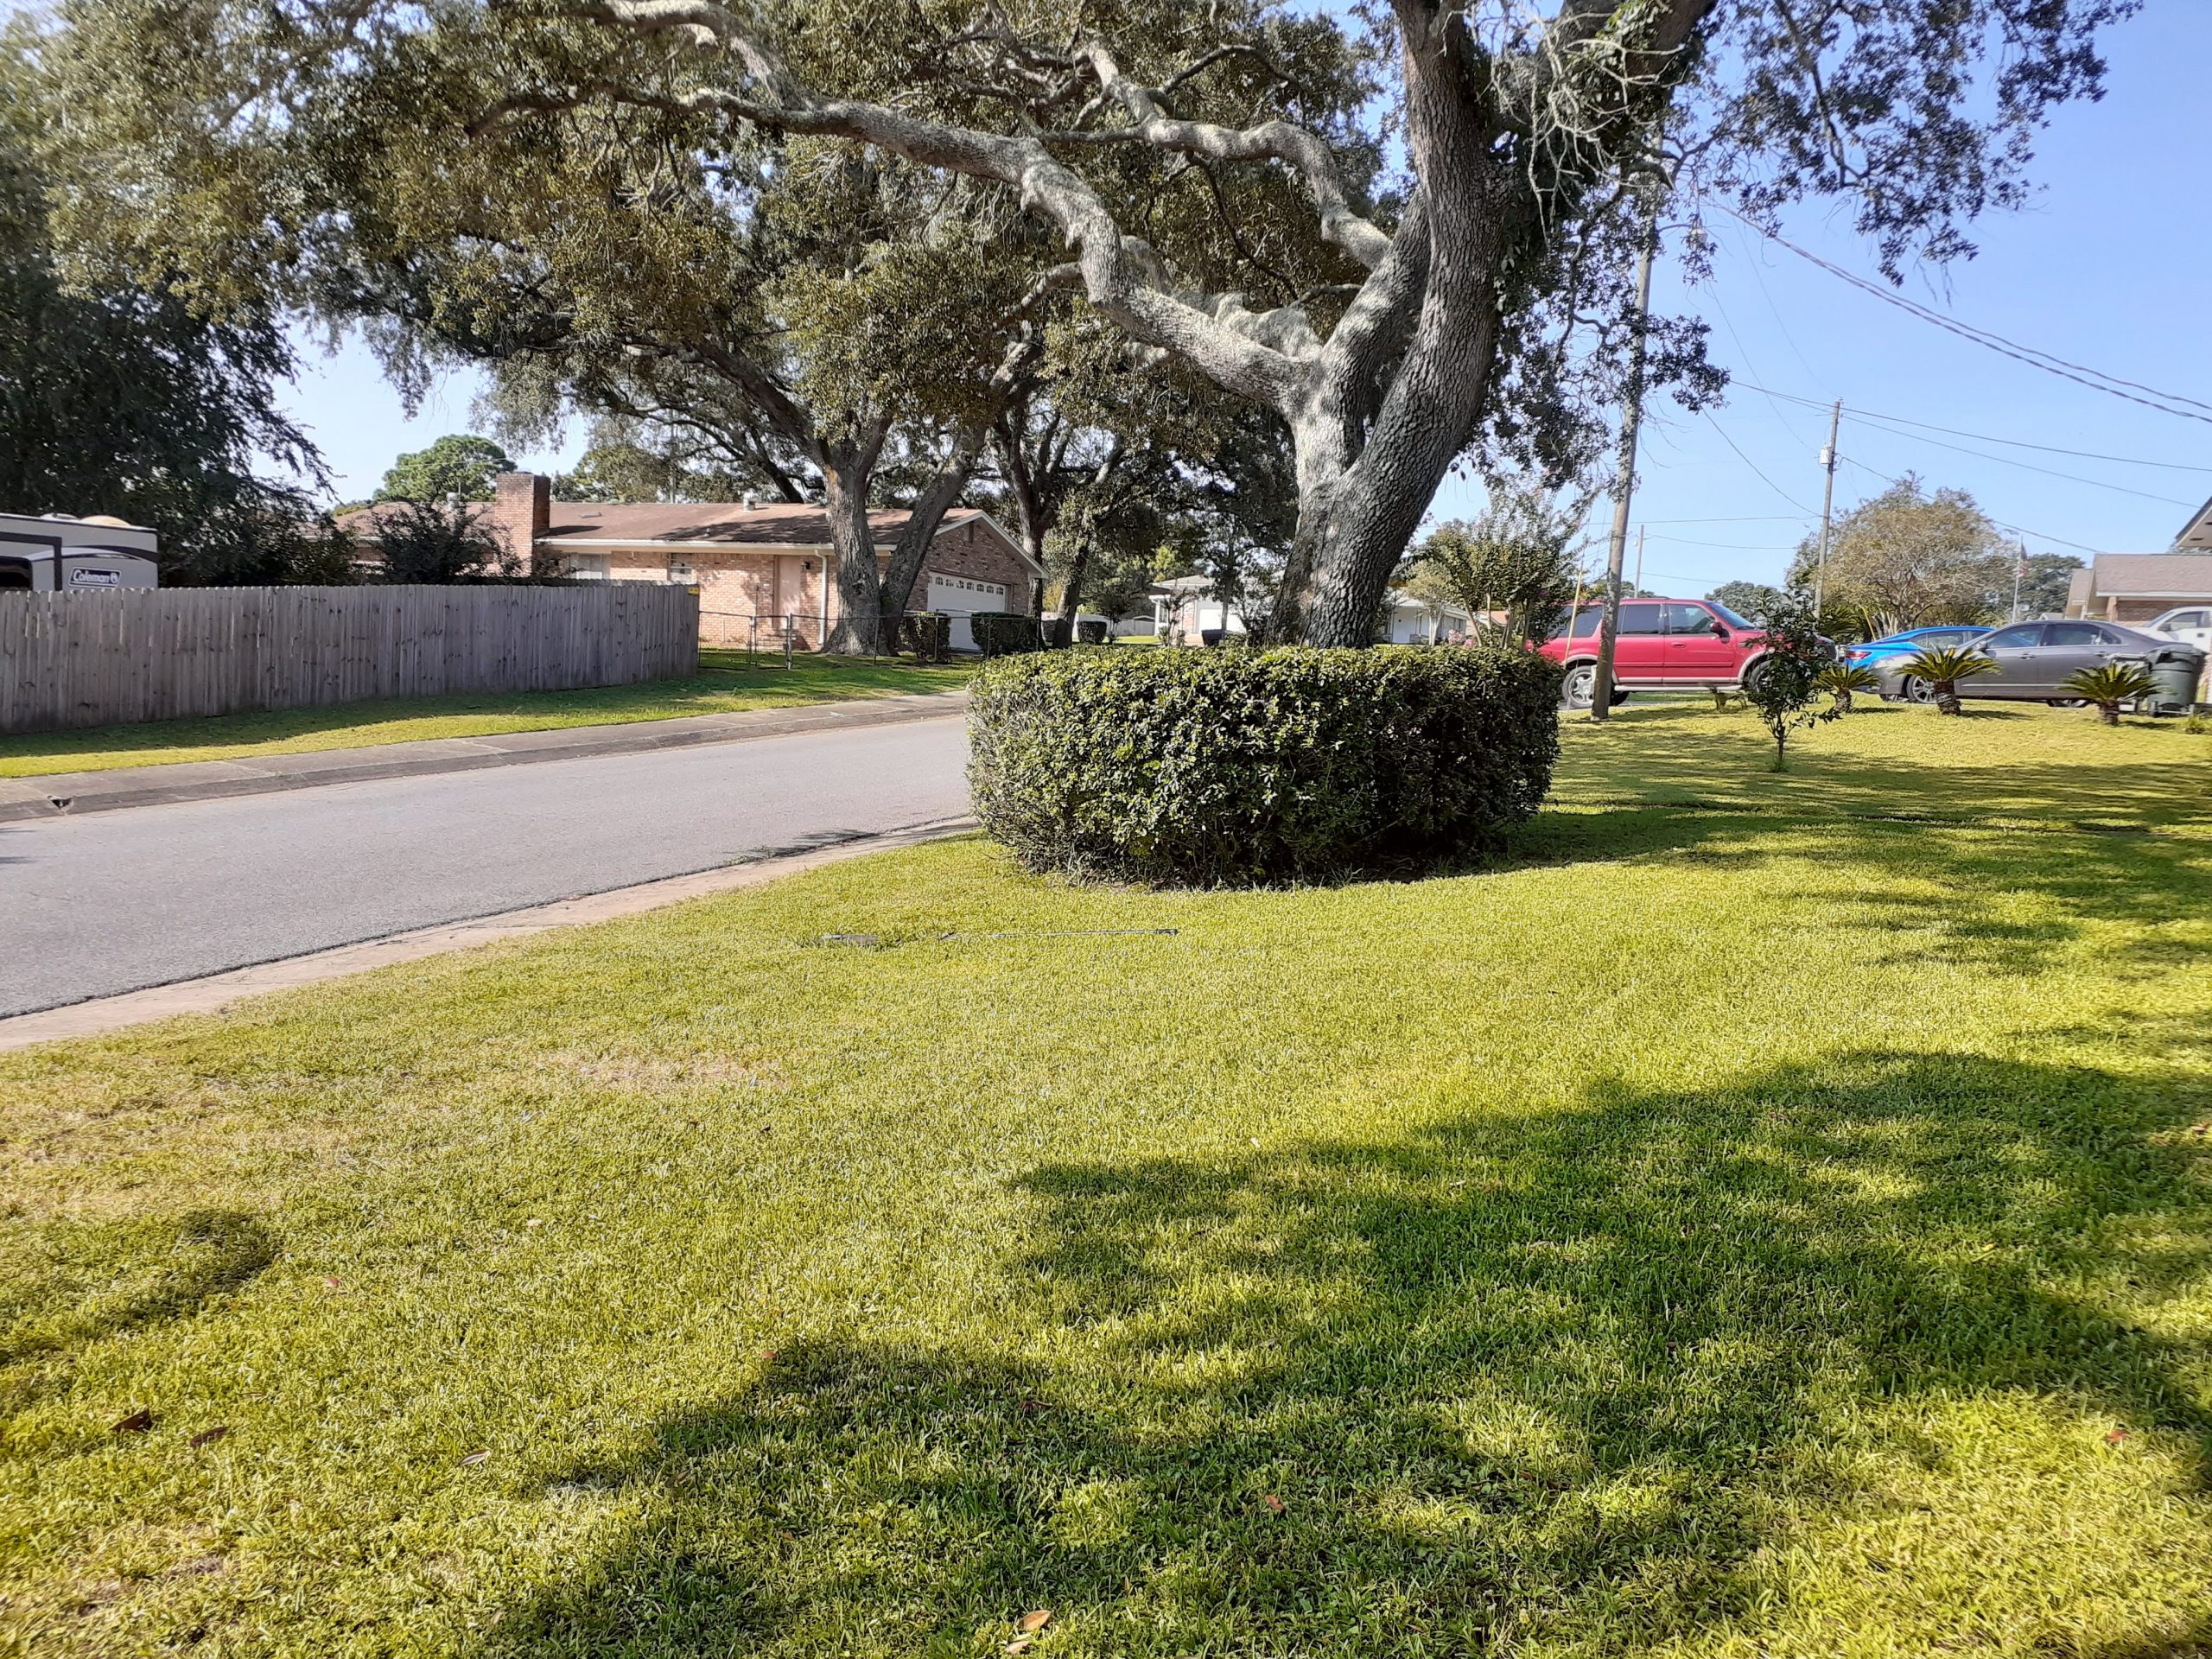 Hedge trimming in Pensacola Fl